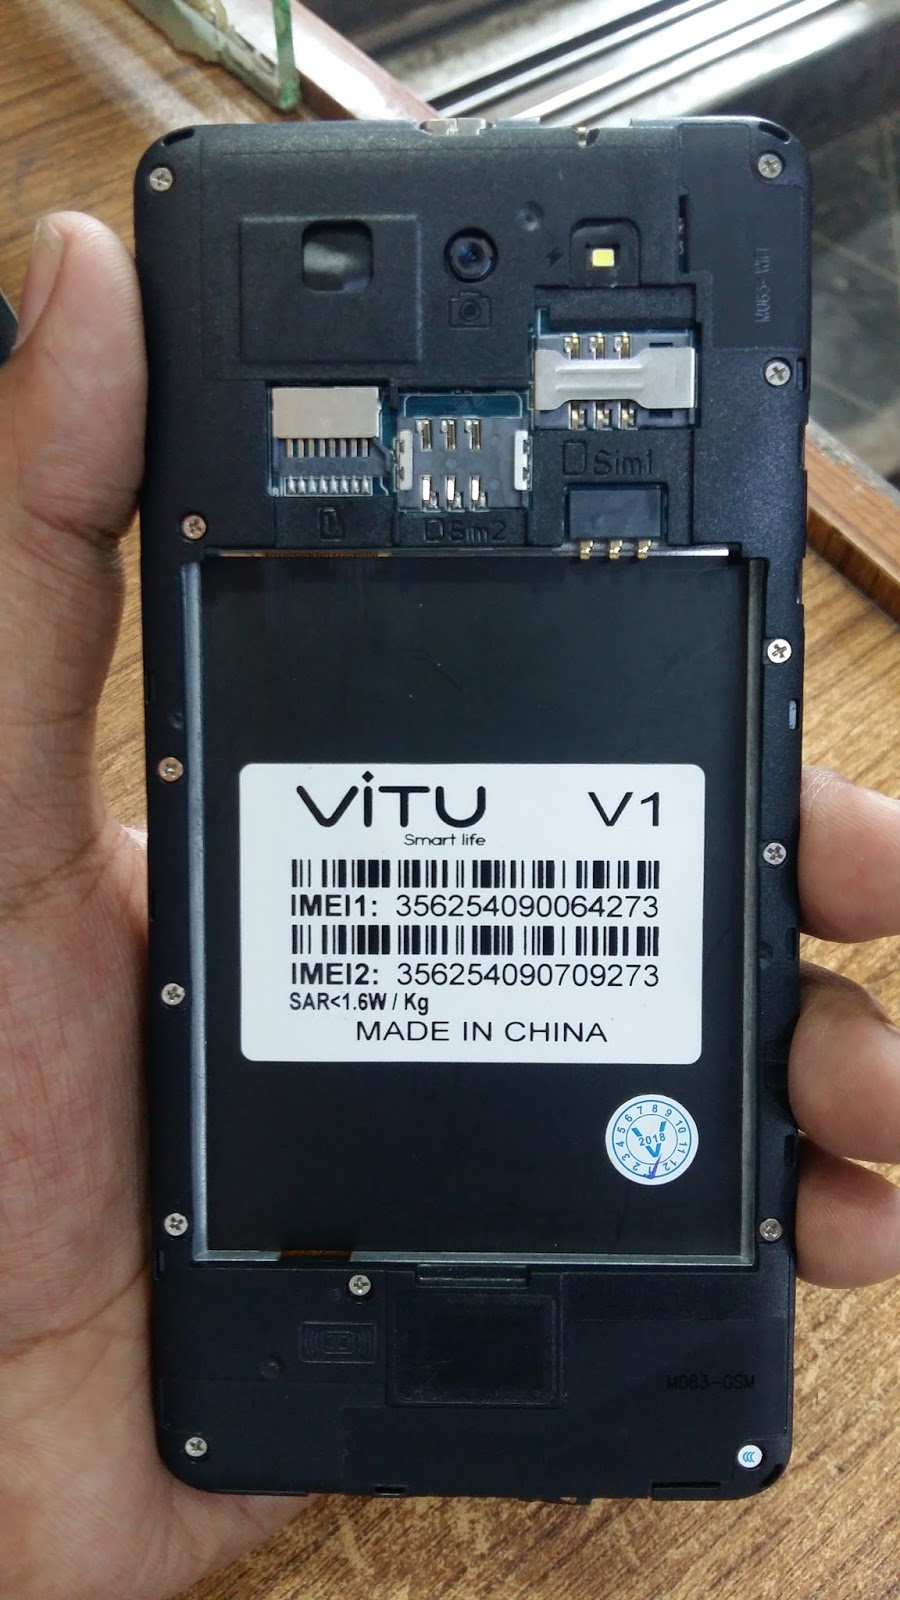 Vitu V1 Flash File